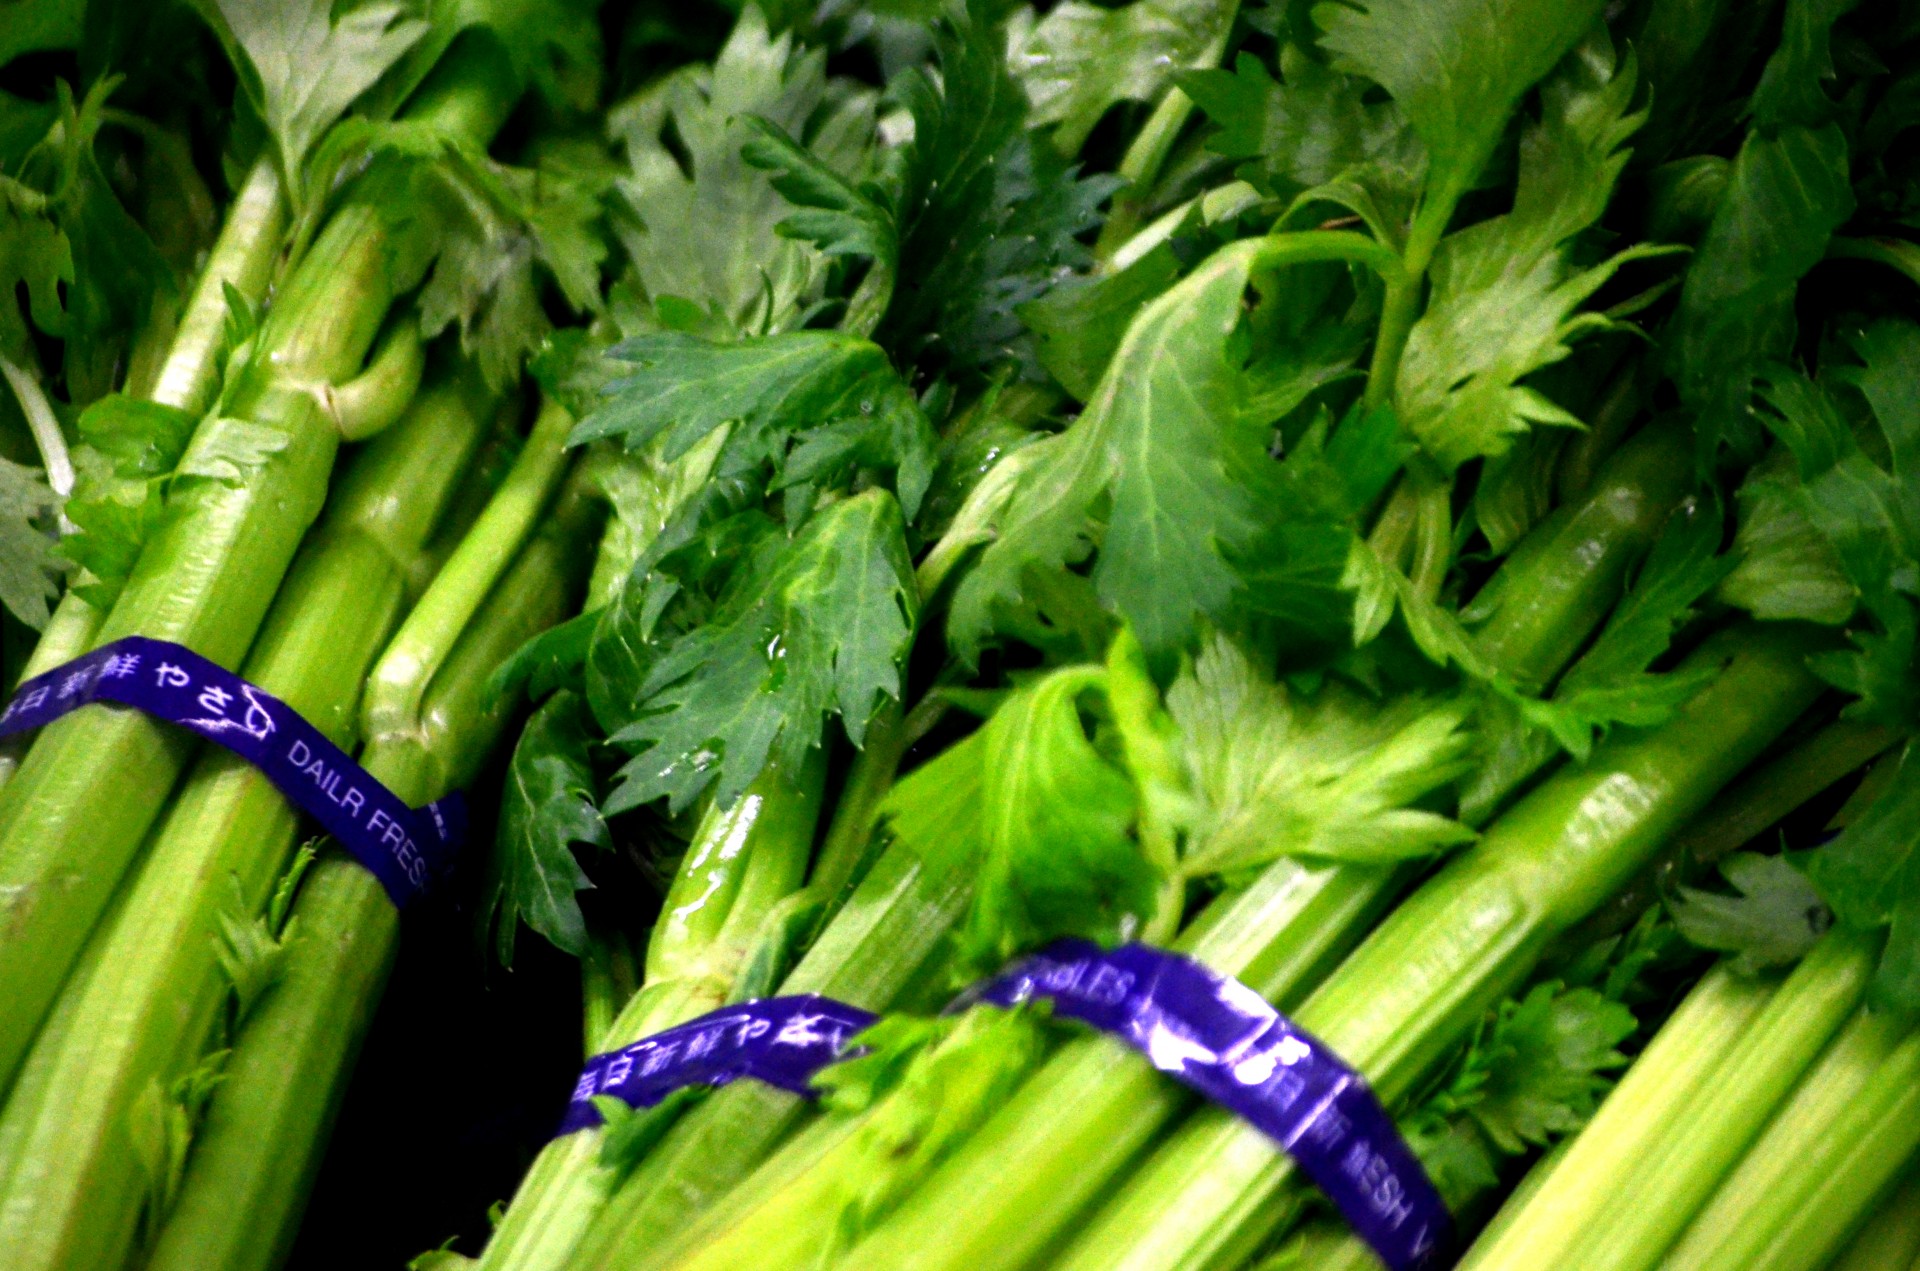 Braised Celery